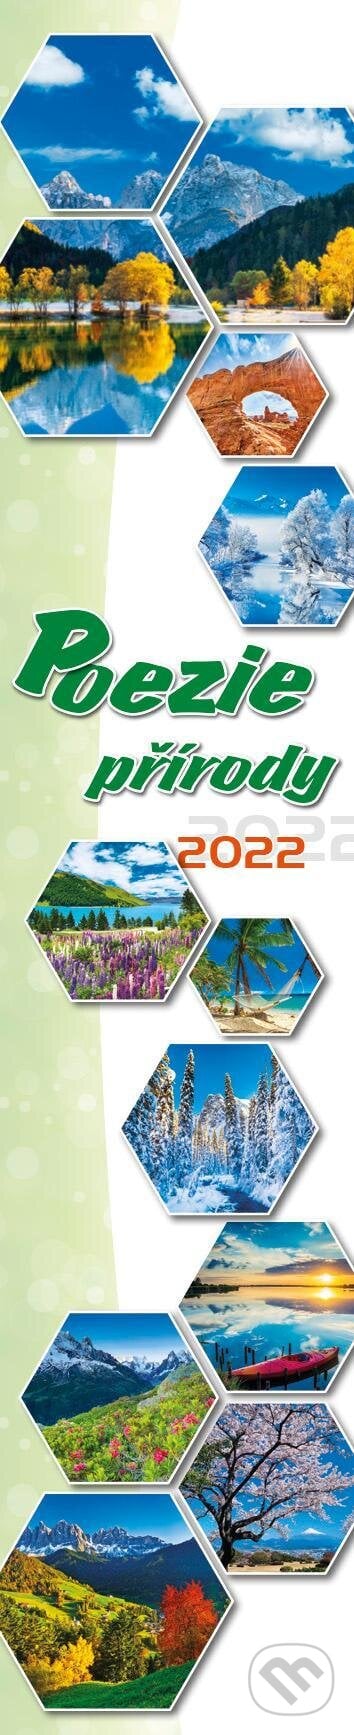 Kalendář 2022 - Poezie přírody, nástěnný, BB/art, 2021